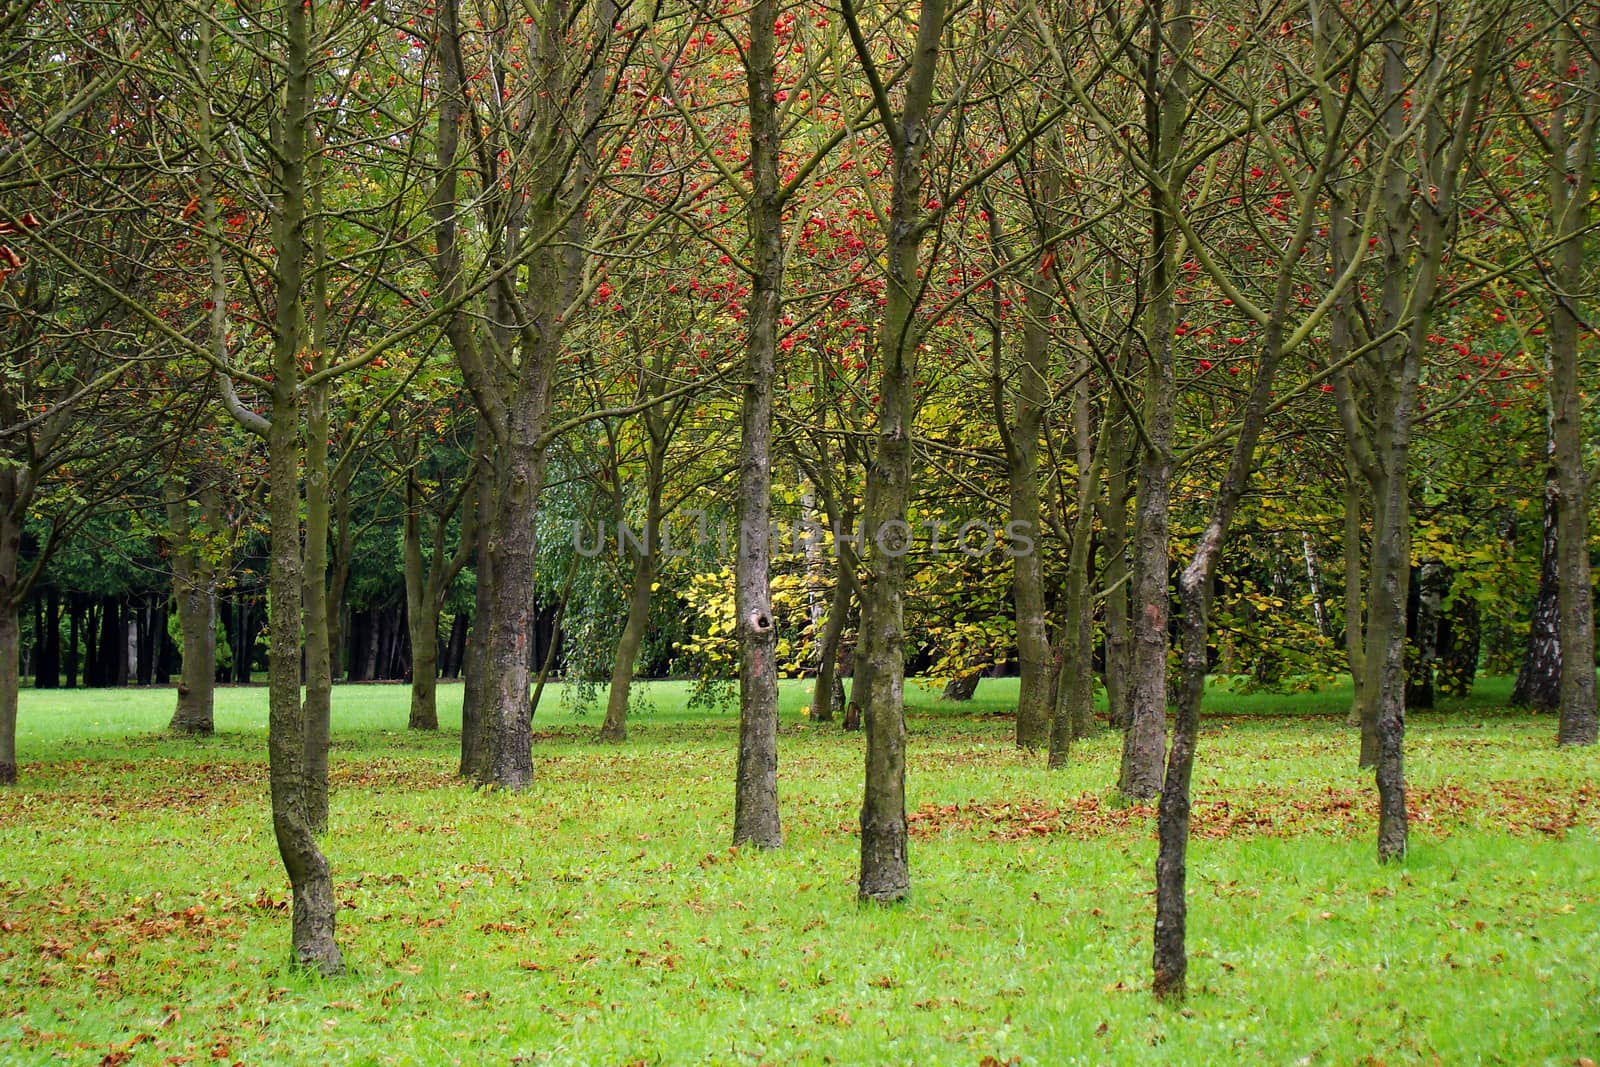 Autumn trees in park by castigatio